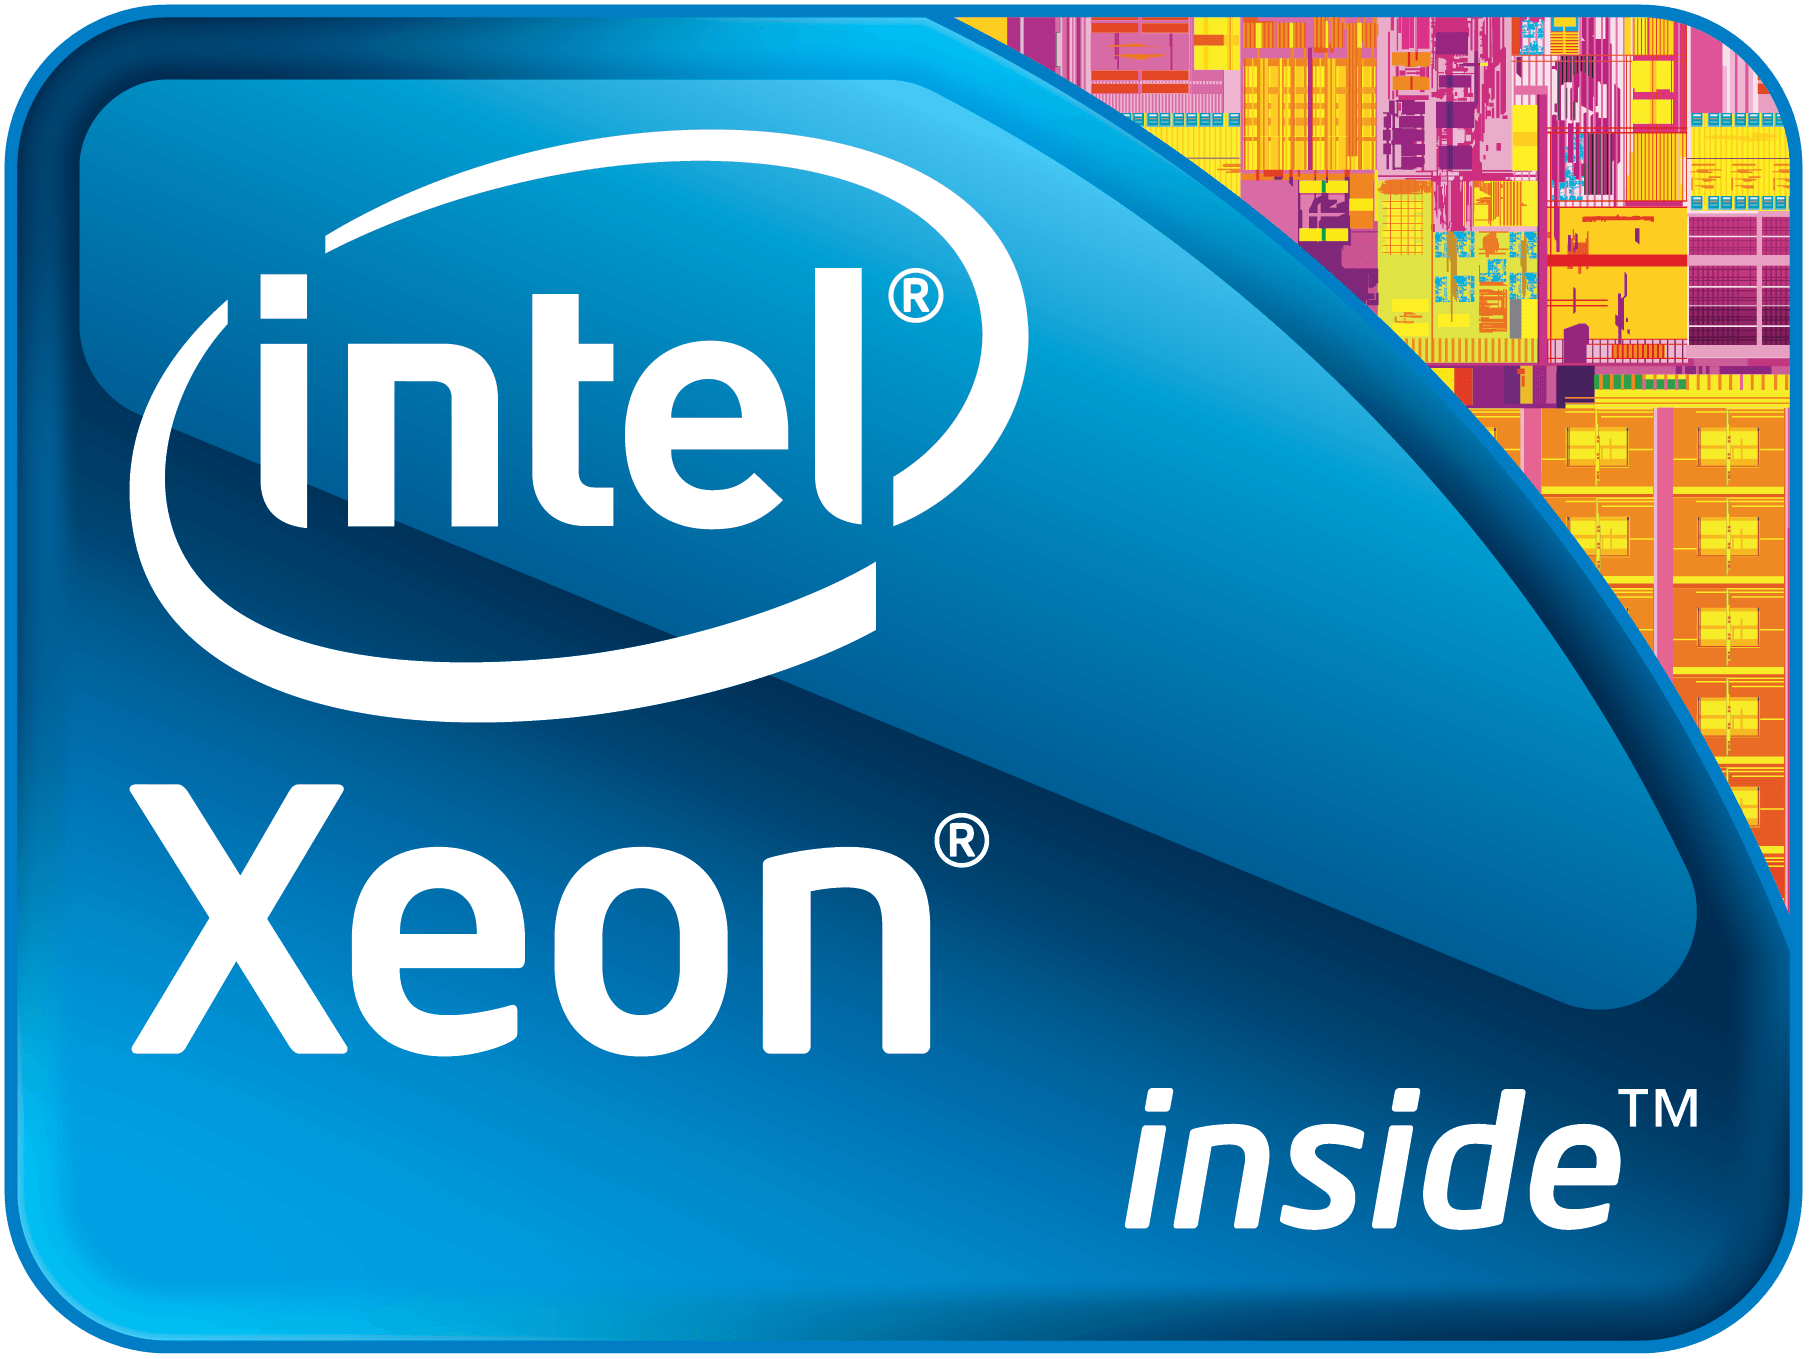 Xeon Logo - Image - Intel Xeon logo (2009).png | Logopedia | FANDOM powered by Wikia